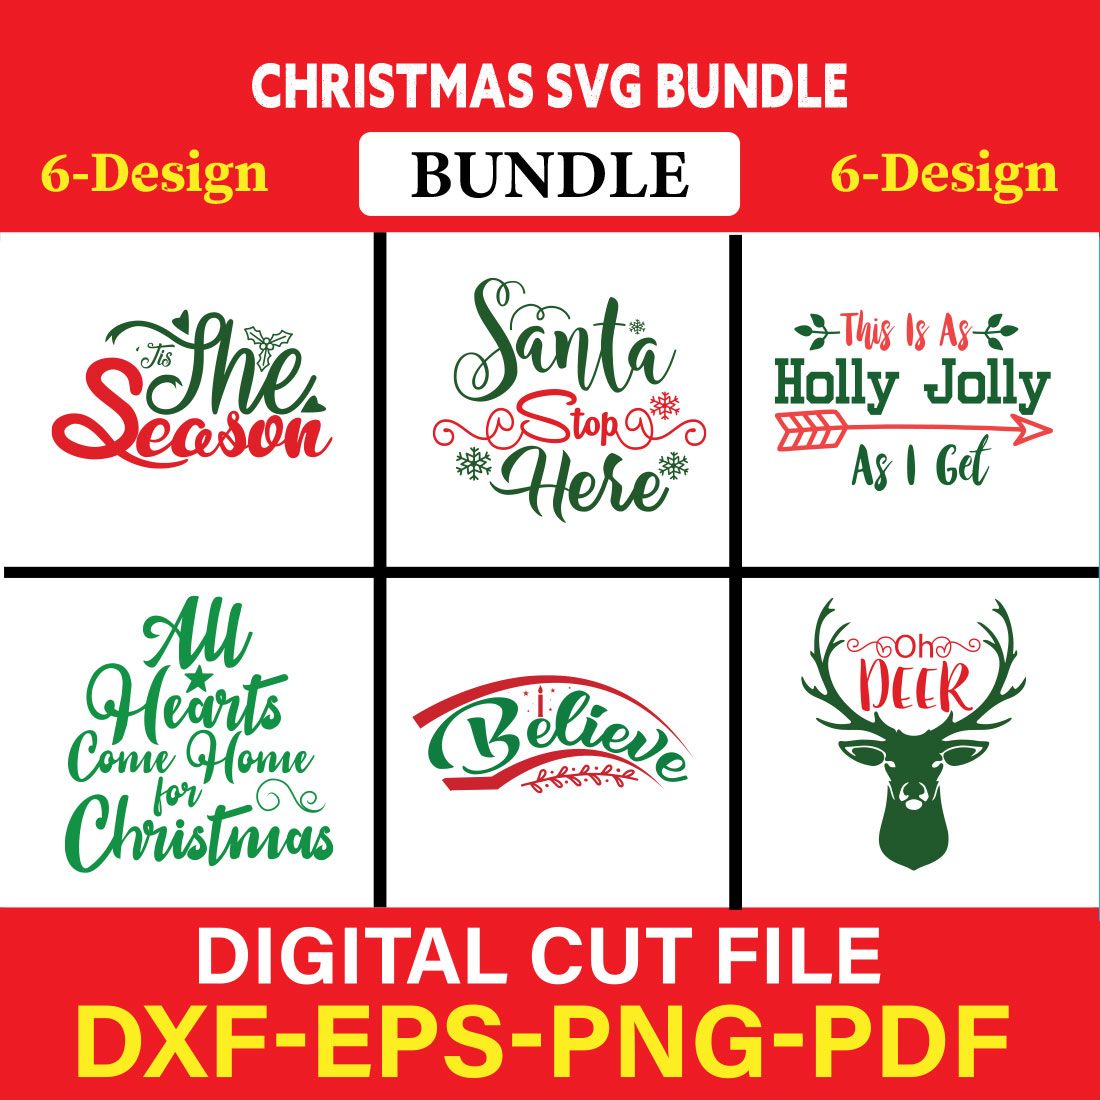 Christmas T-shirt Design Bundle Vol-6 cover image.